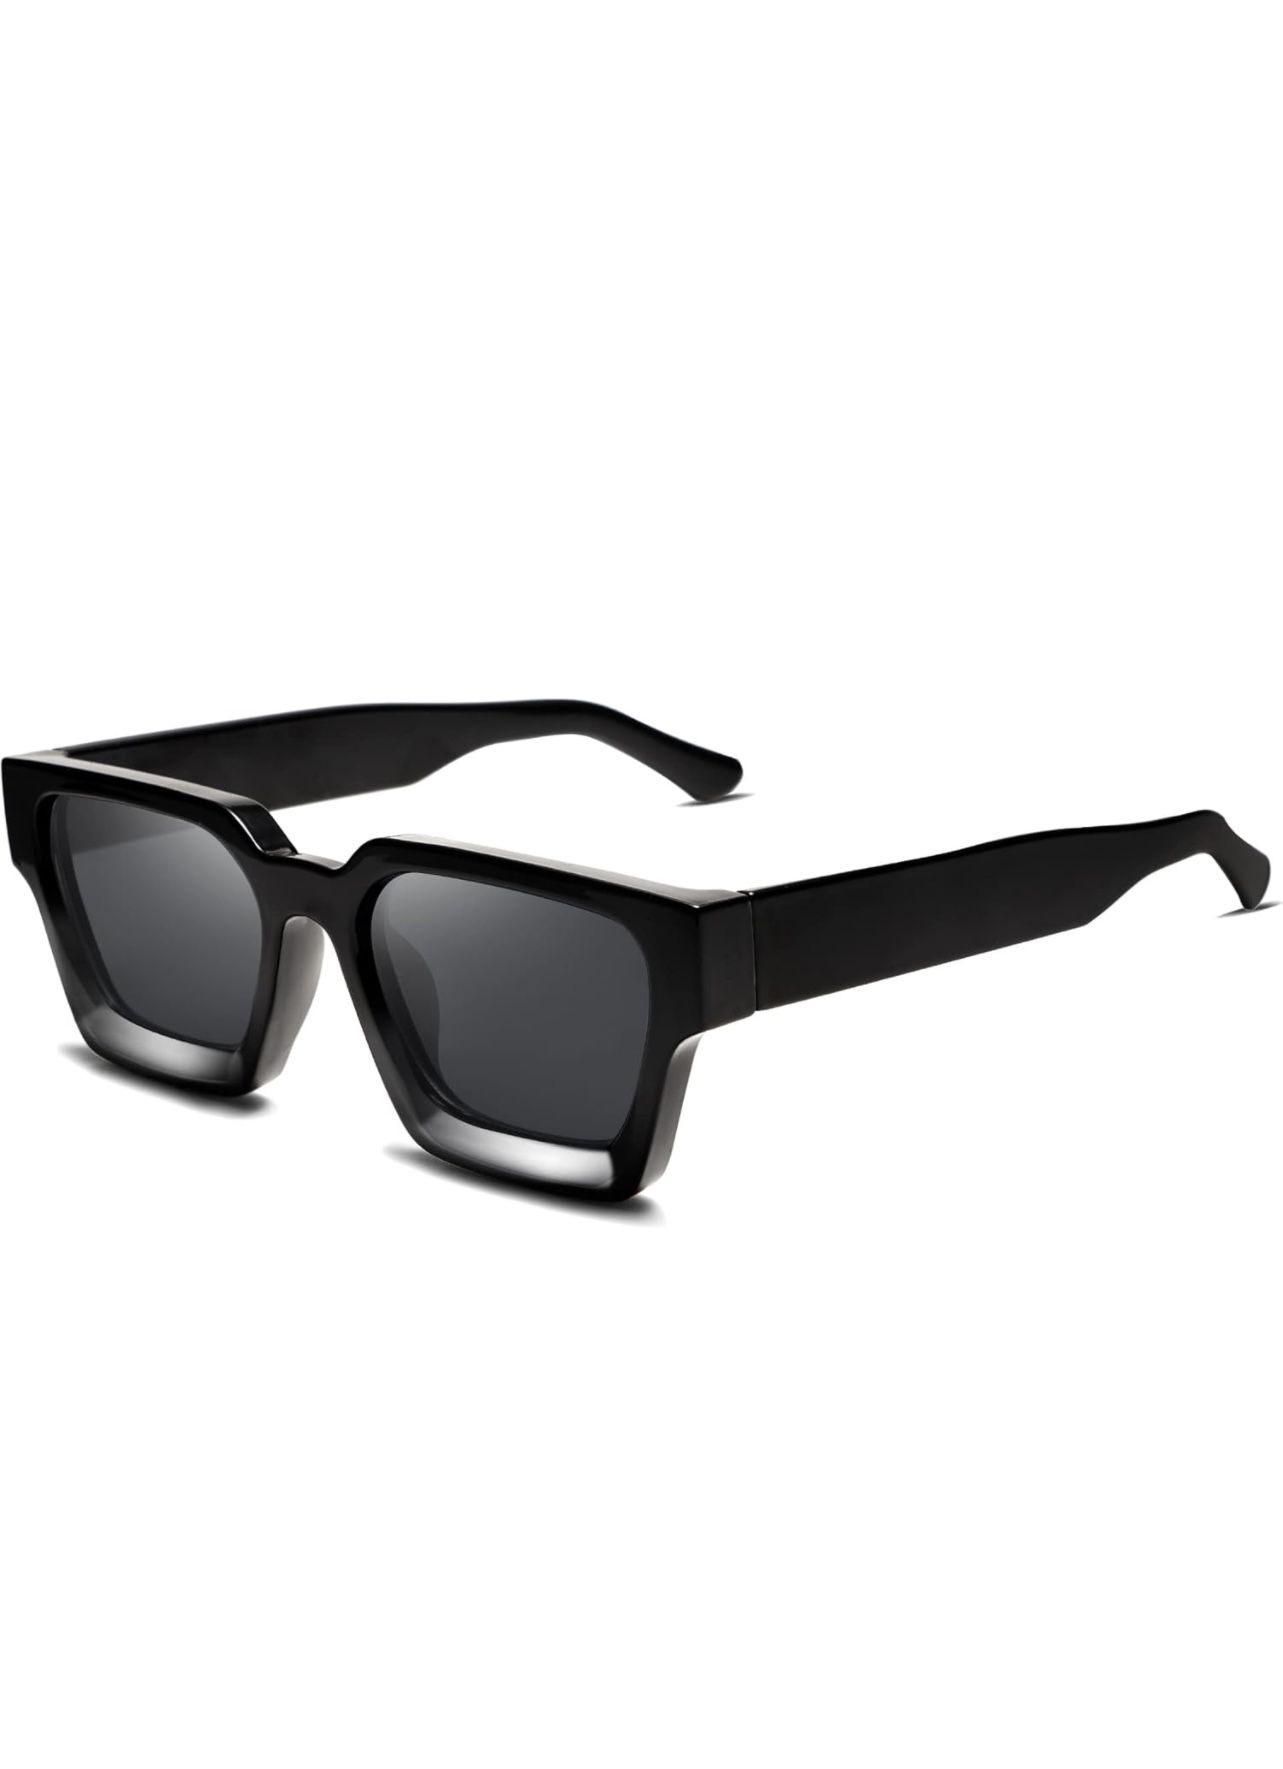 Women Sunglasses Square Frame UV Protection Unbranded 